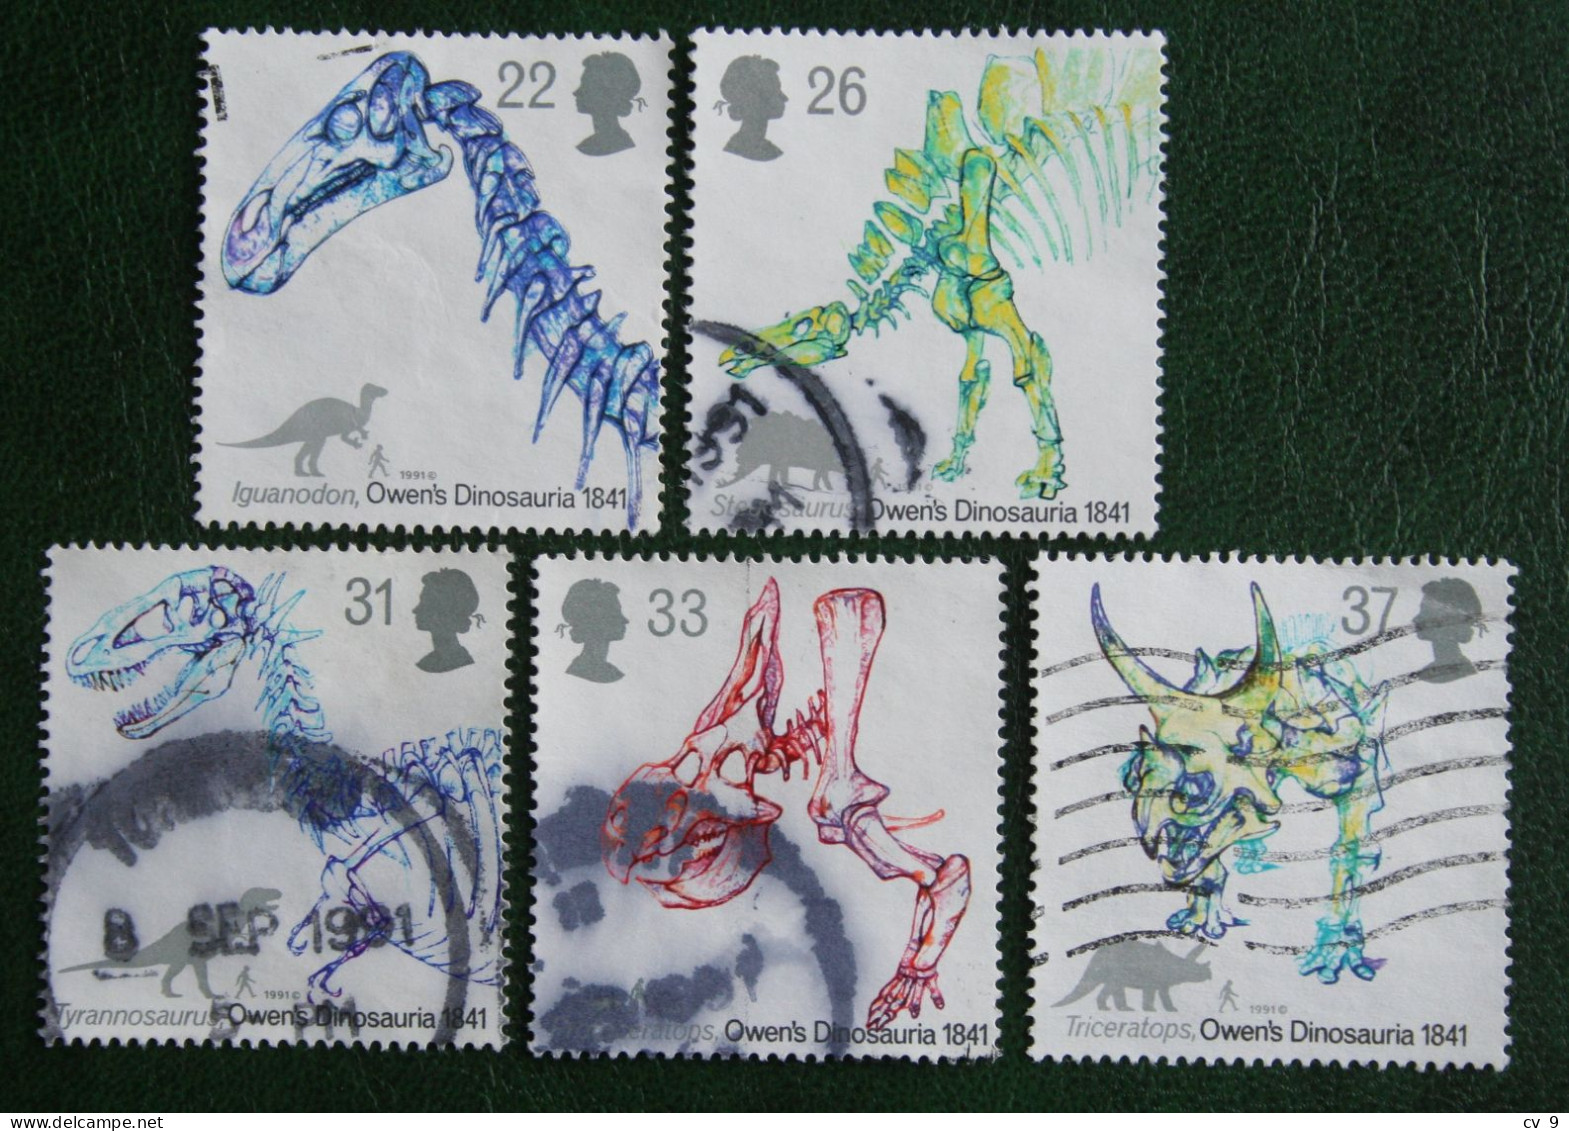 Owen's Dinosauria Dinosaurs Dinosaures Mi 1350-1354 1991 Used Gebruikt Oblitere ENGLAND GRANDE-BRETAGNE GB GREAT BRITAIN - Used Stamps